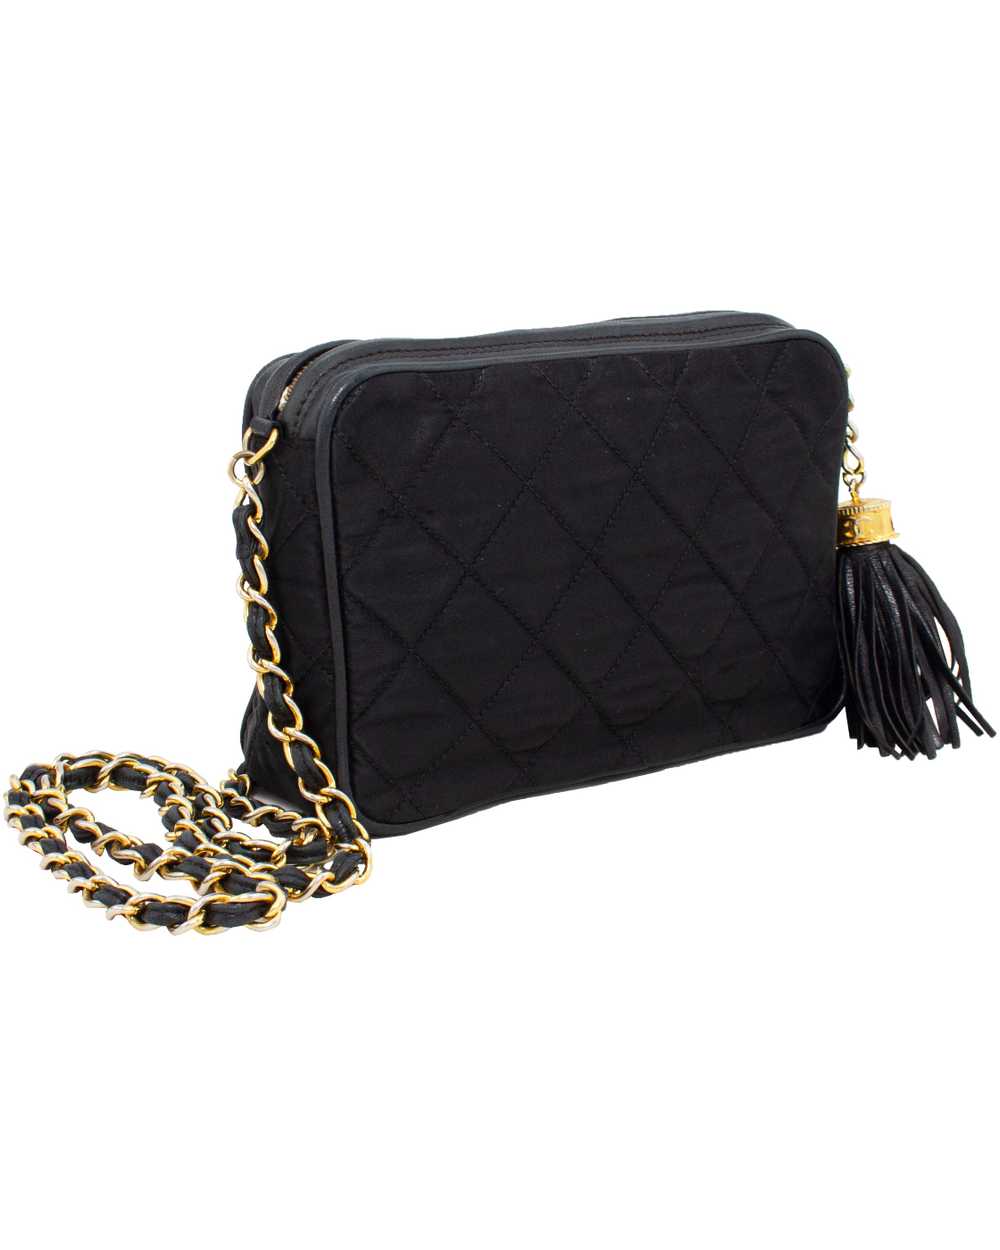 Chanel Black Satin Quilted Evening Bag - image 2